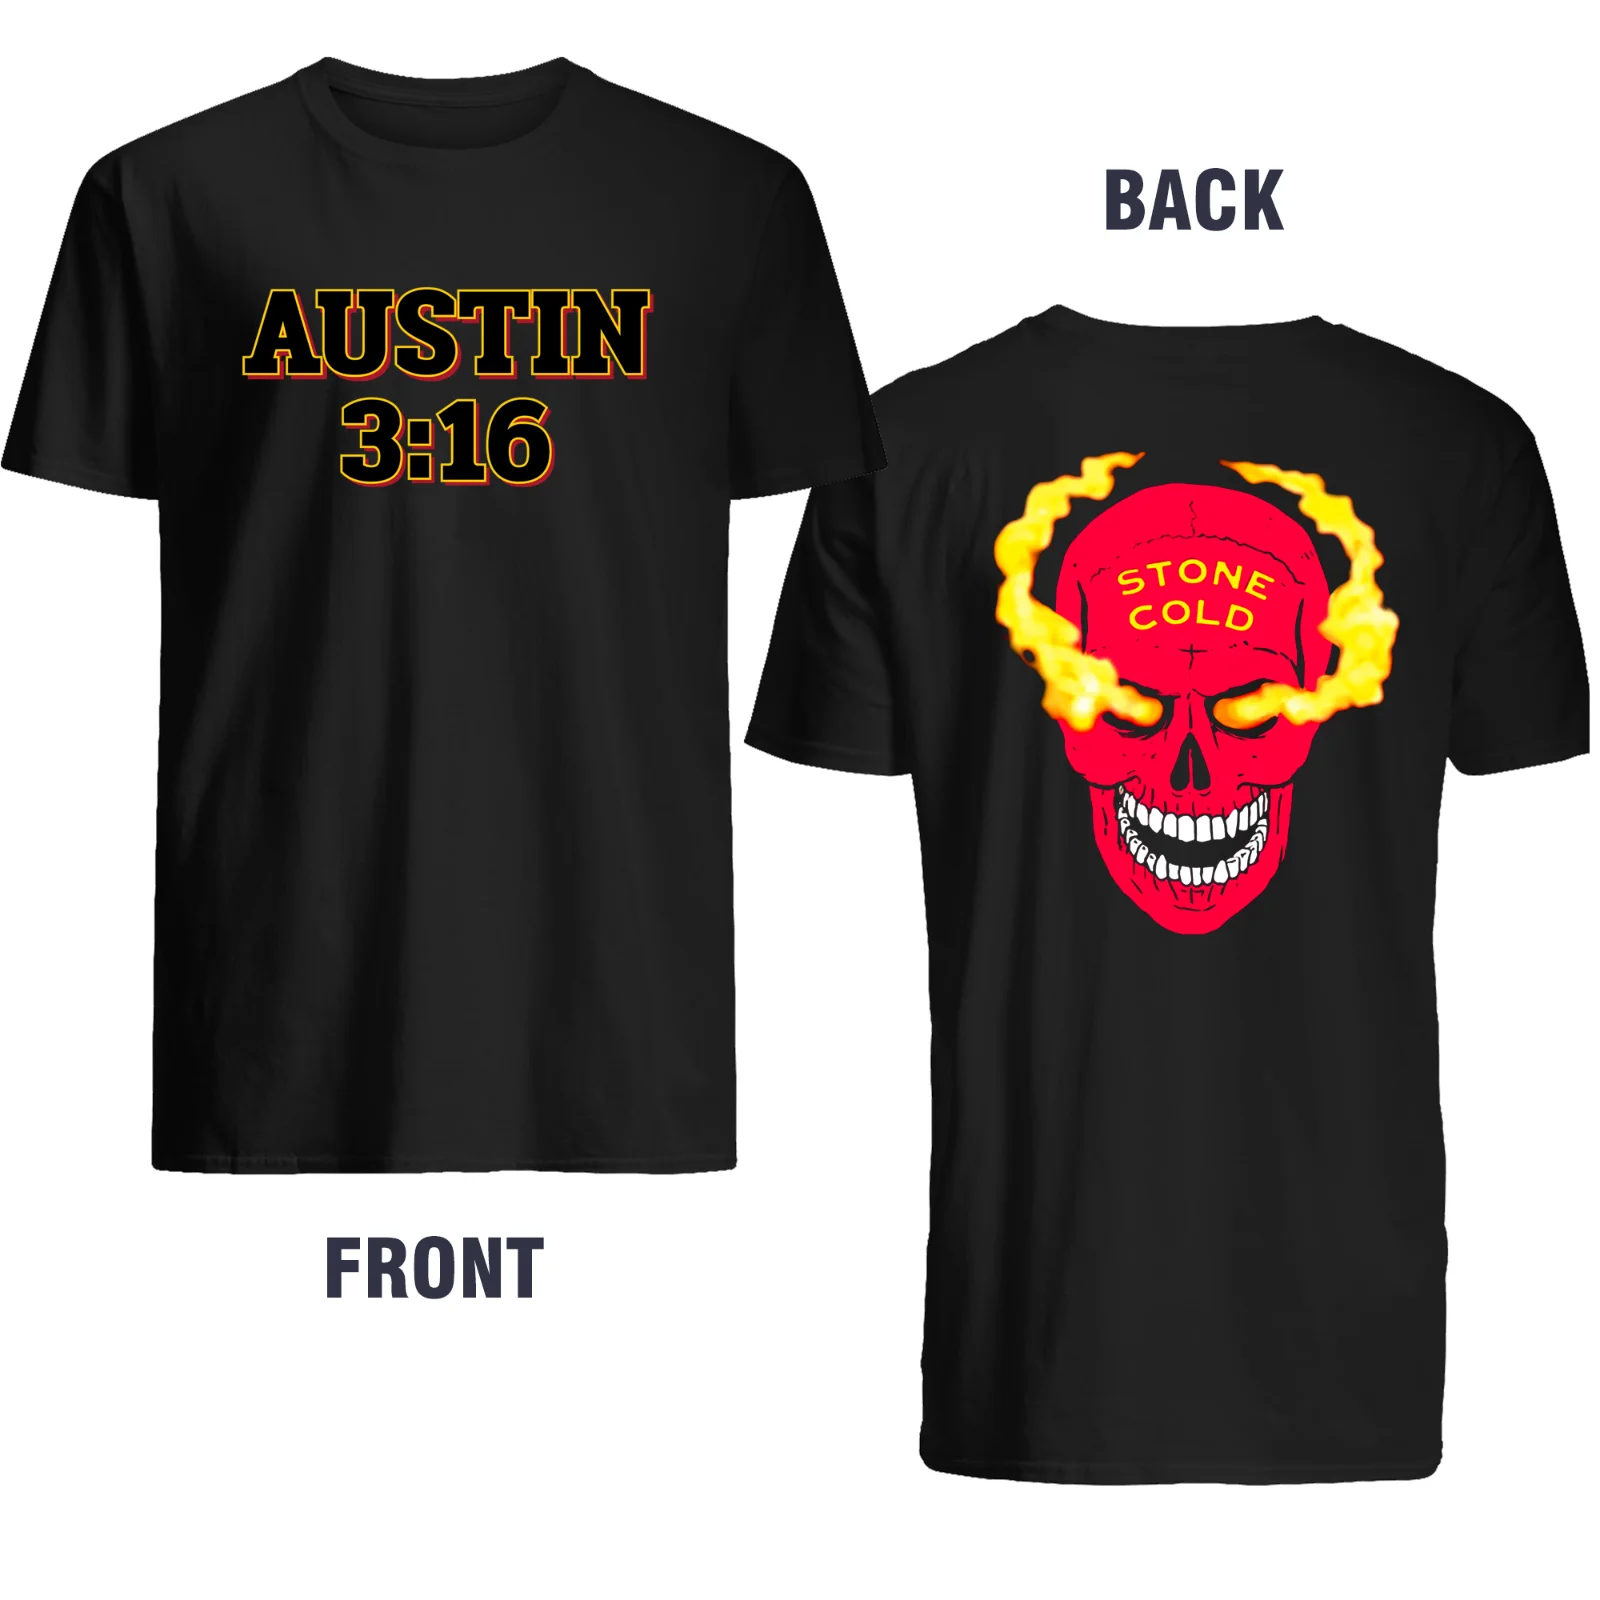 

Stone Cold Steve Austin “Austin 3:16” Red Skull T-Shirt S-3XL Print Both Sides